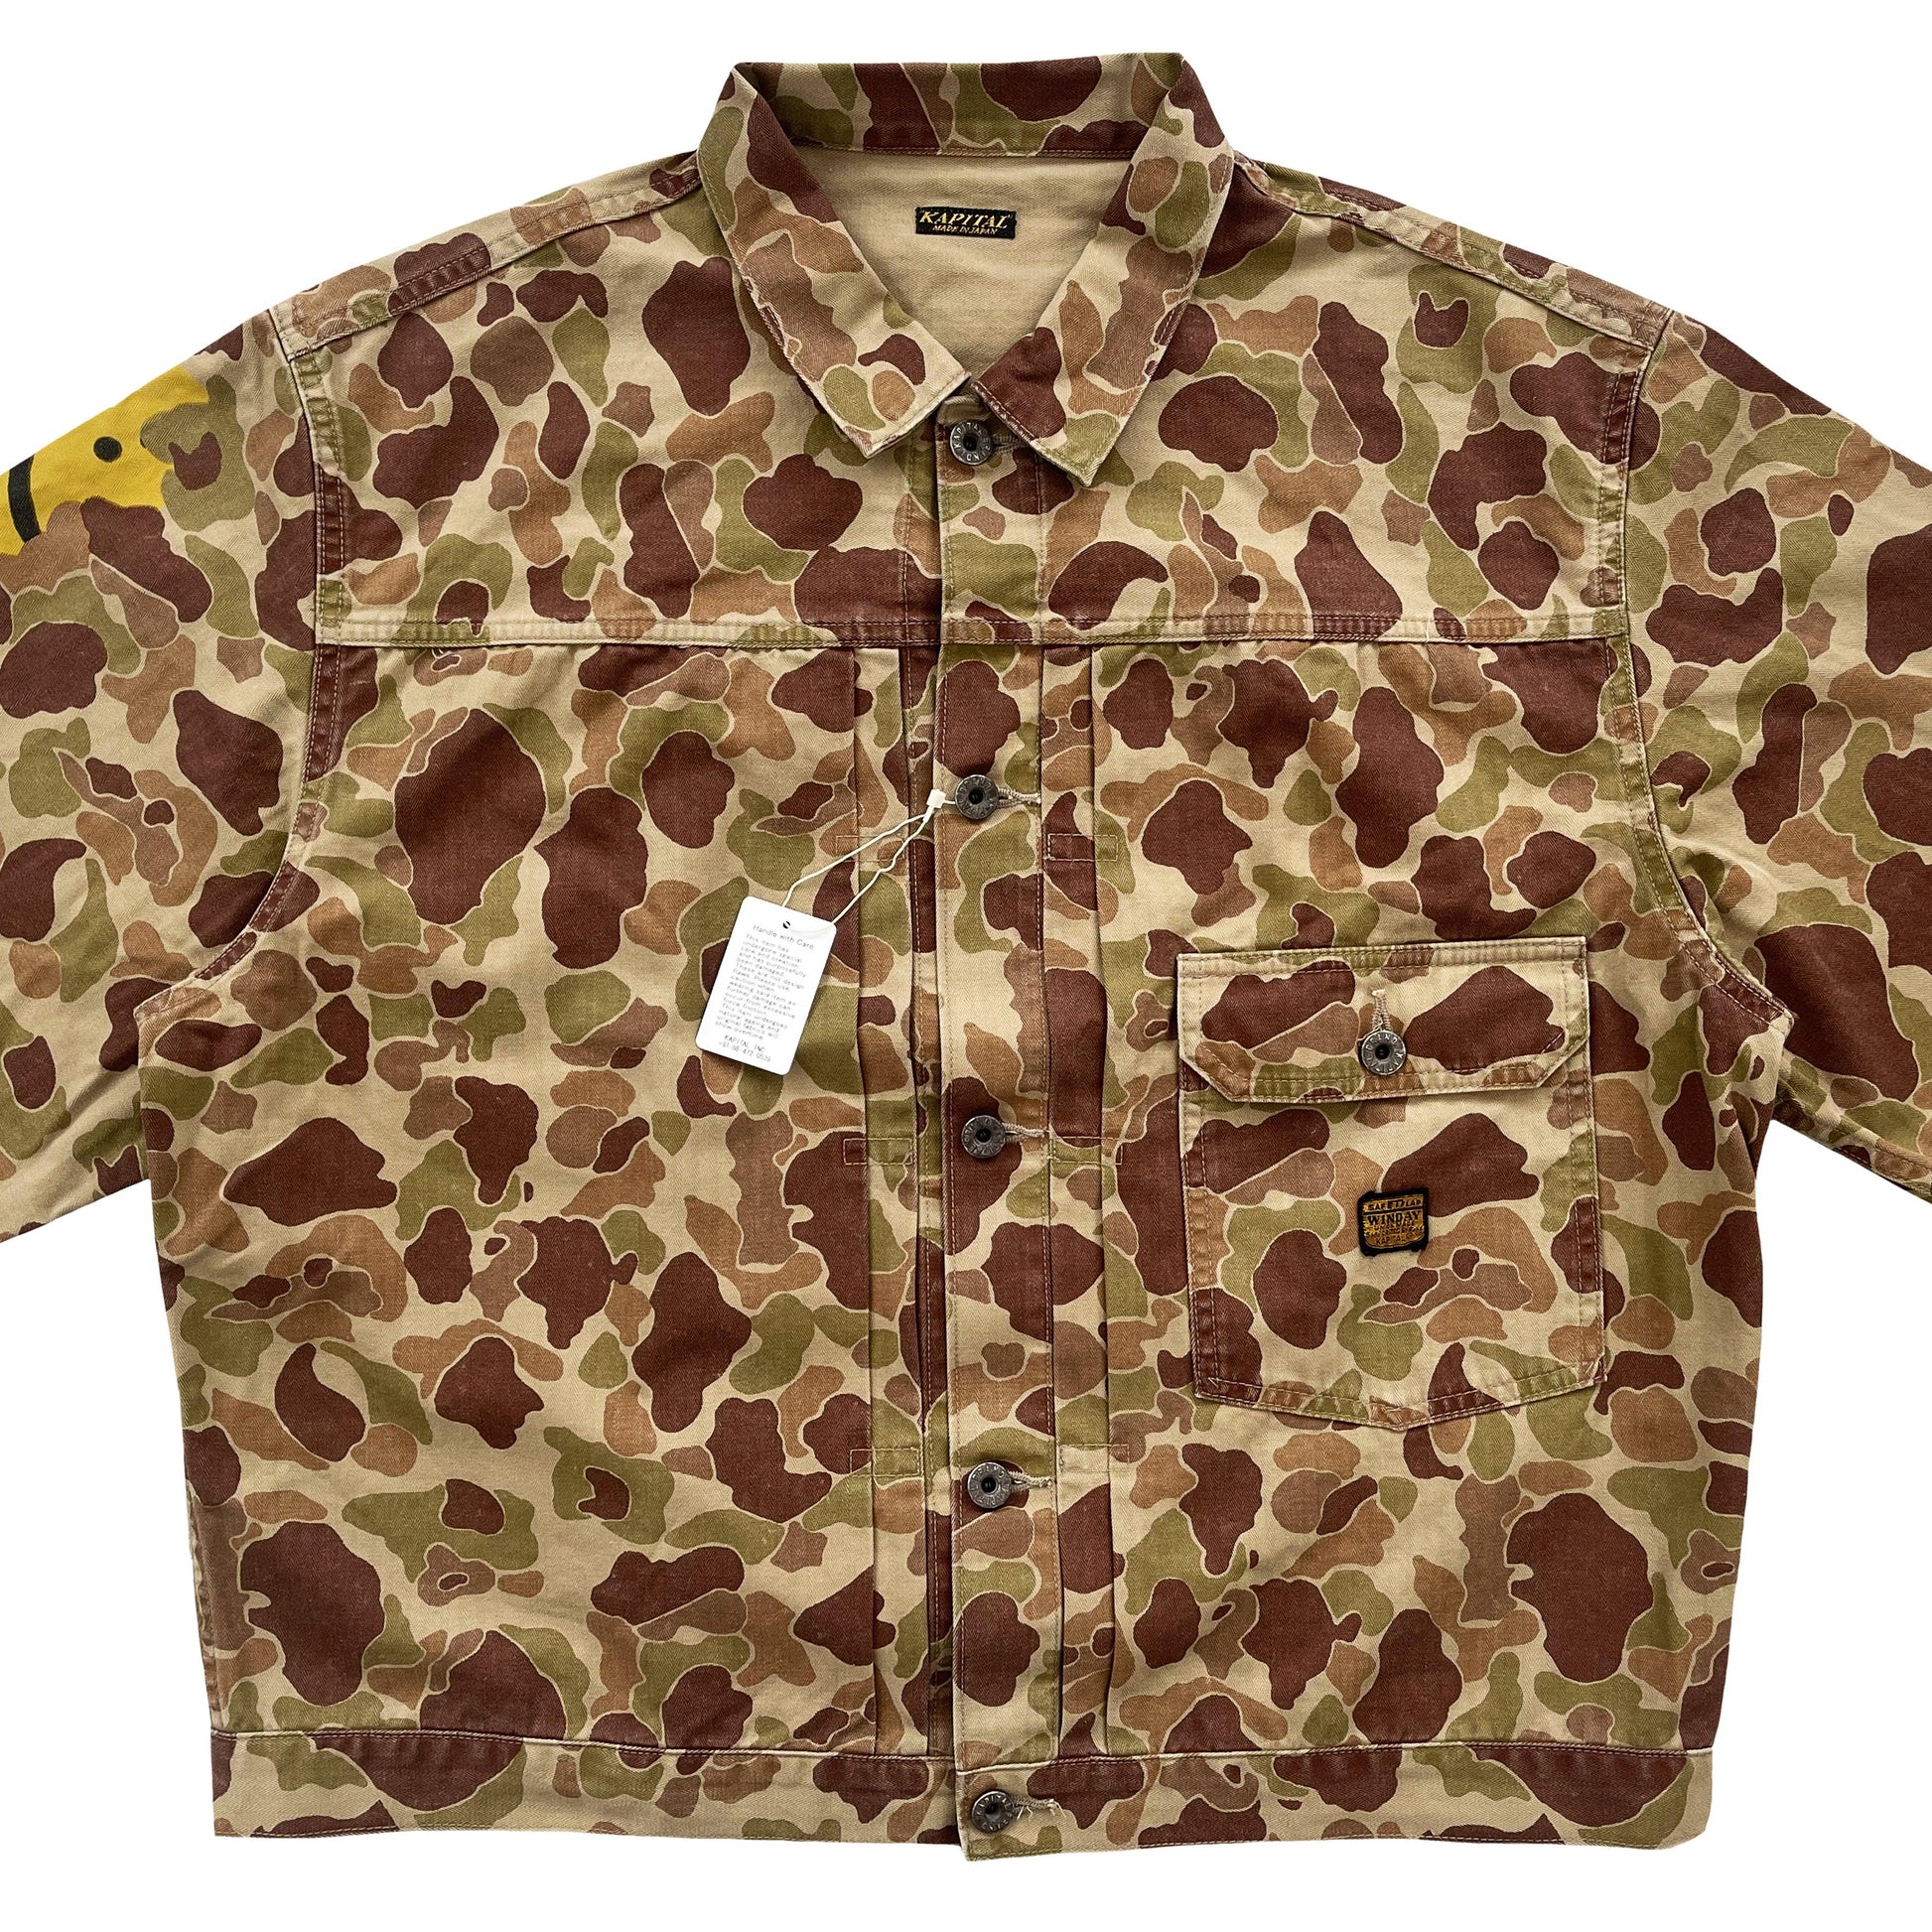 Kapital Camouflage Cotton Twill Jacket - Known Source